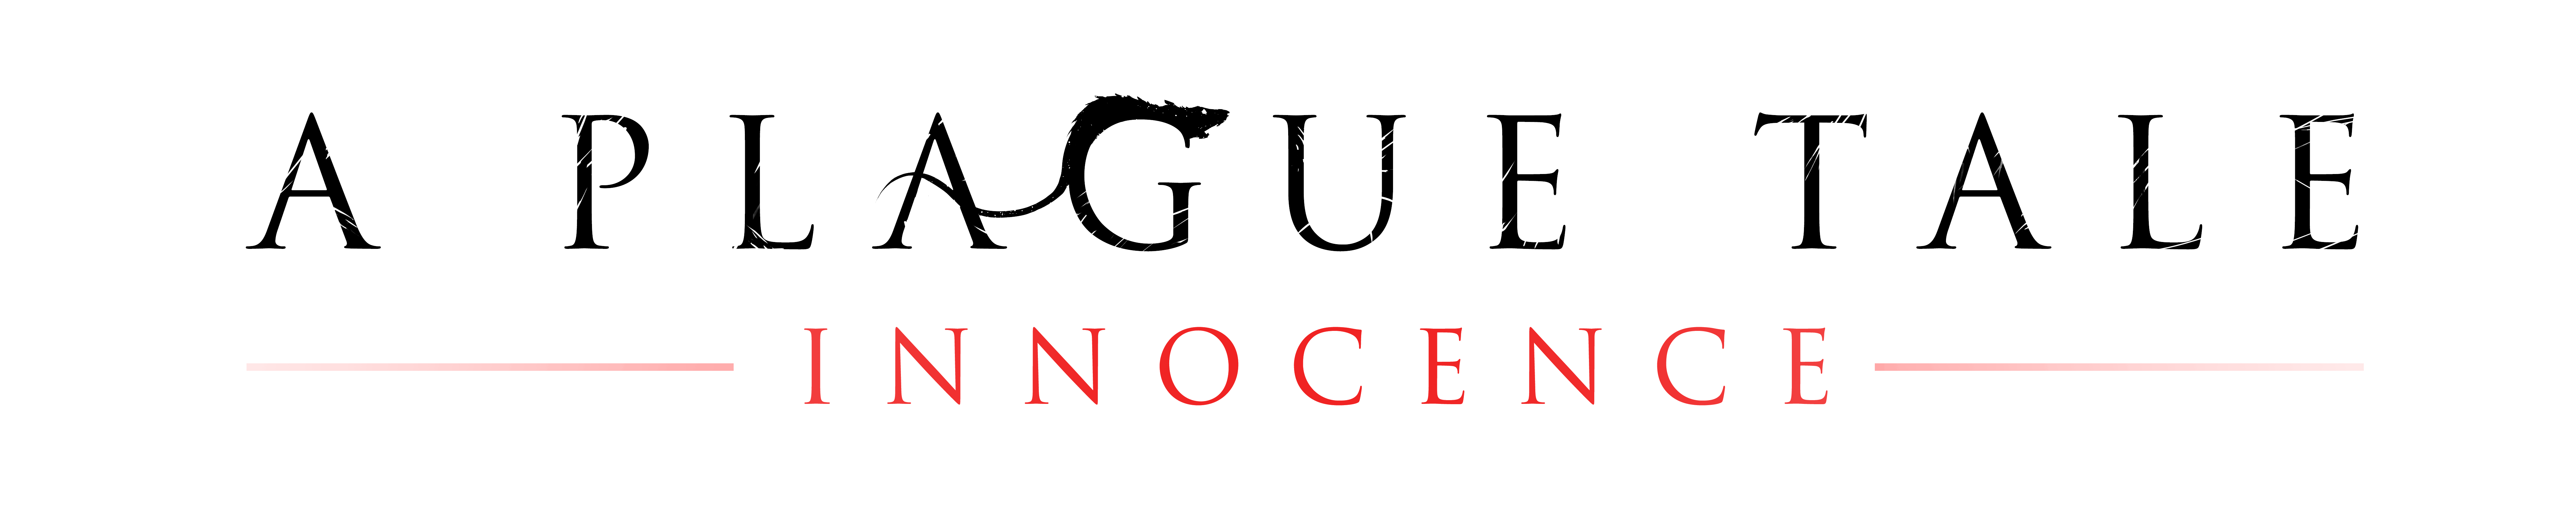 A Plague Tale - Innocence Logo 2.png